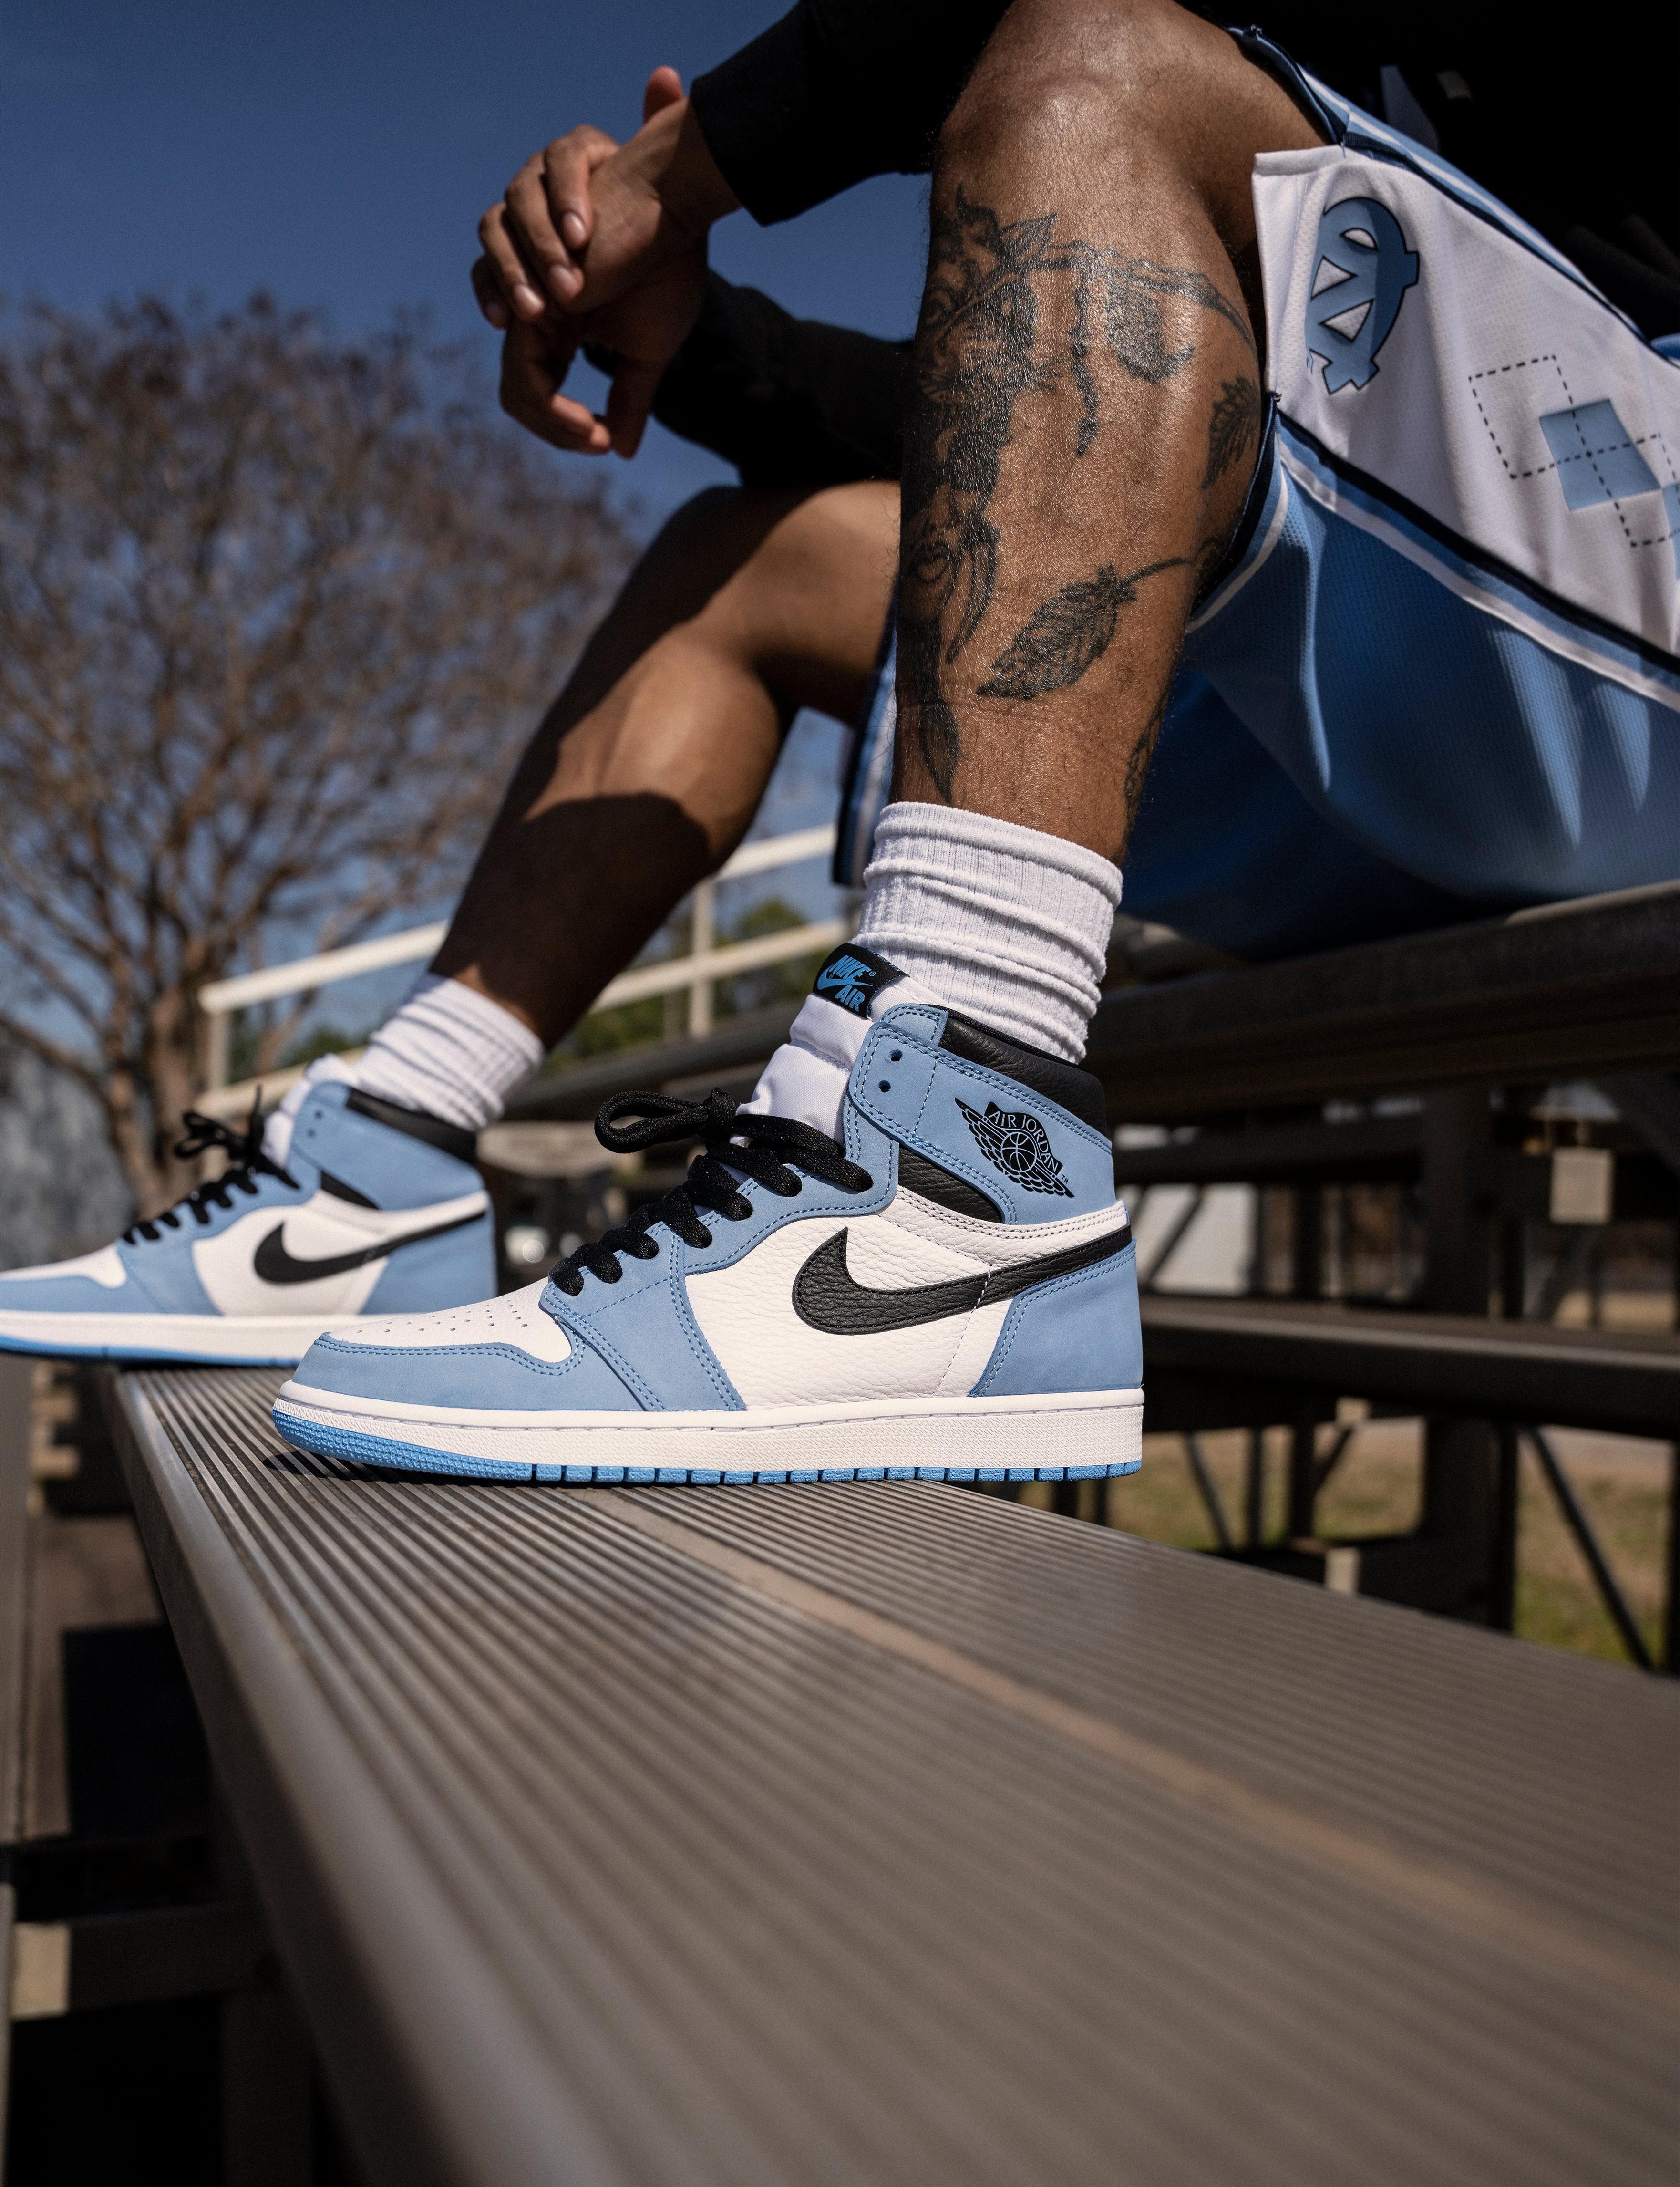 Sneakers Release – “University Blue” UNC-Inspired Jordan 1 Retro 